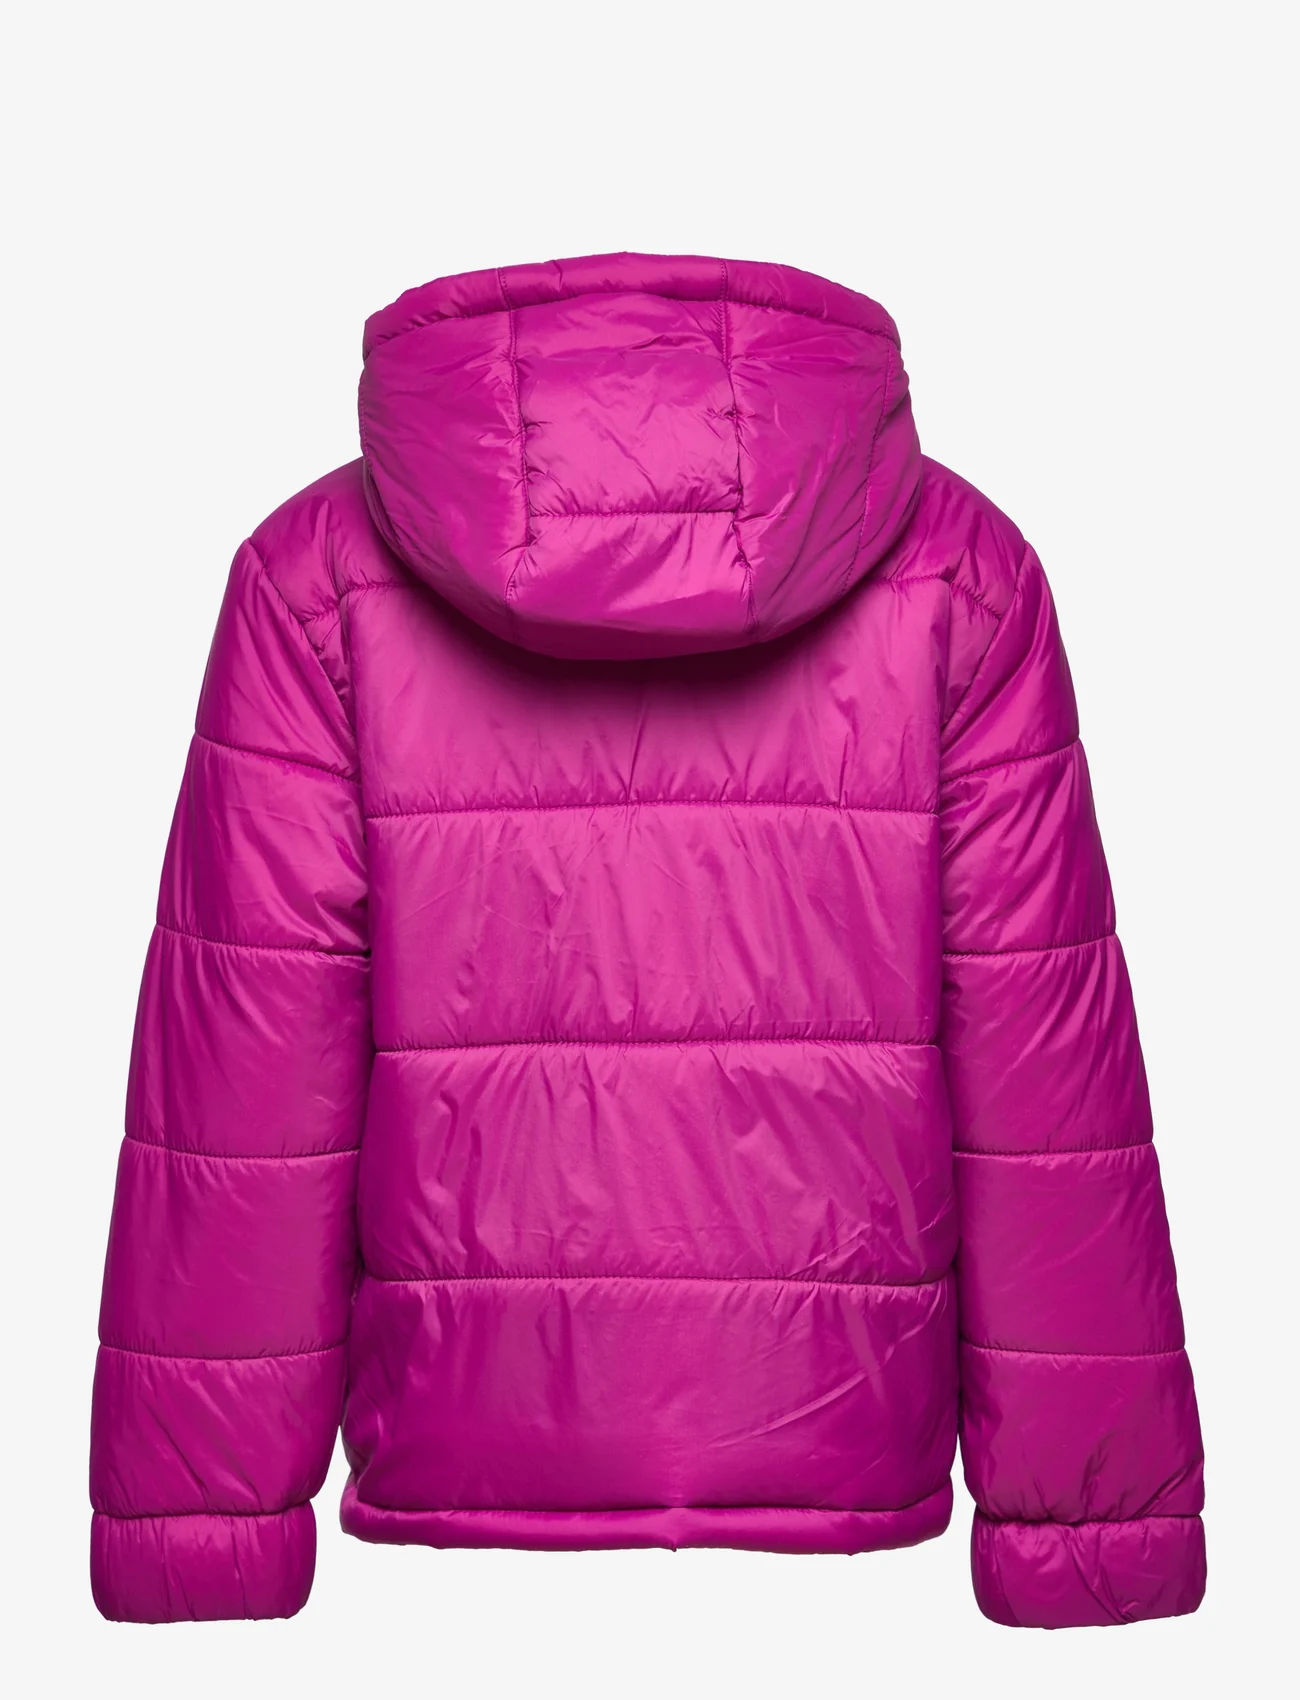 FILA - BREMEN padded jacket - insulated jackets - wild aster - 1